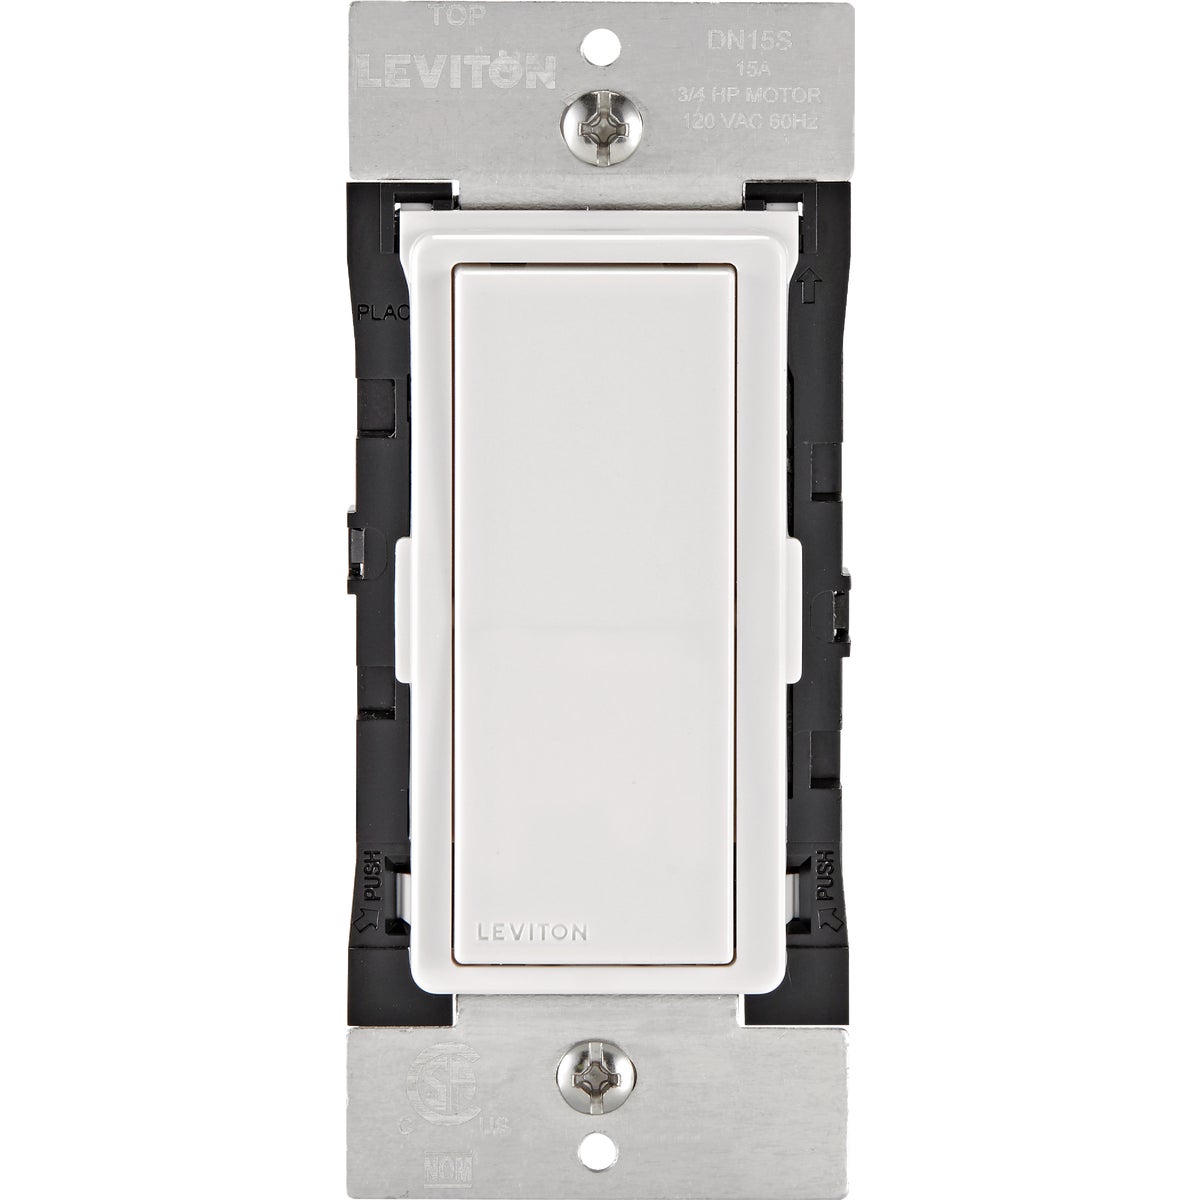 Leviton Decora Smart 15A Rocker Wireless Light Switch, White